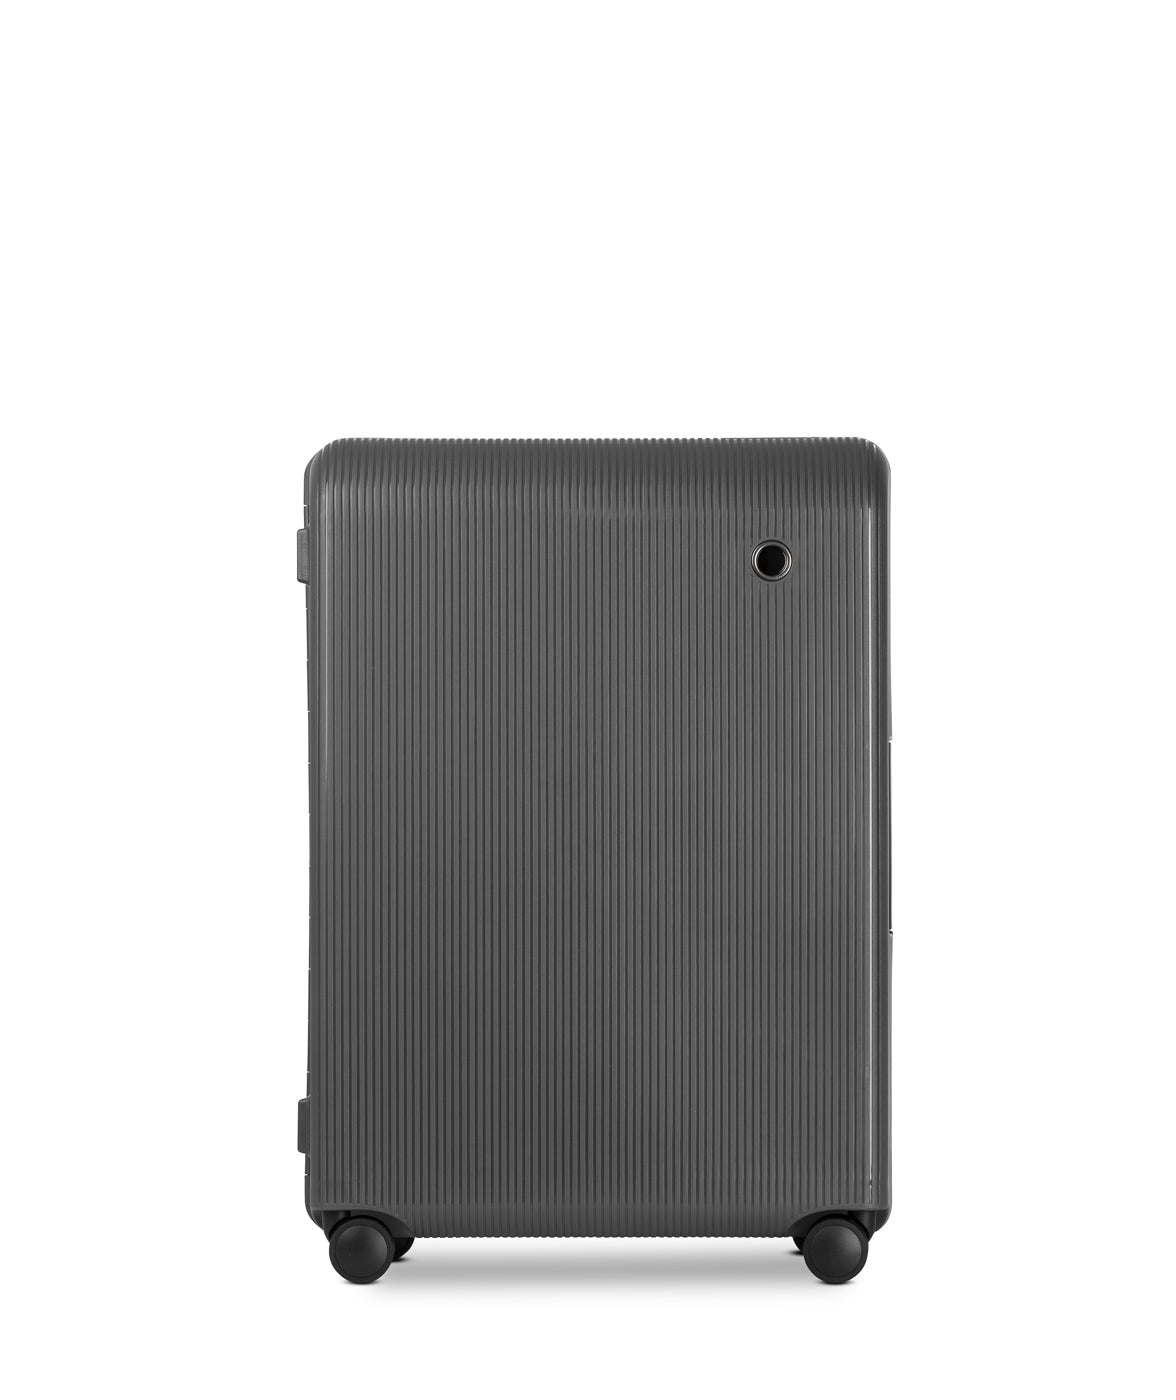 Echolac Fusion Koffer, Medium 66 cm, Dunkelgrau Front